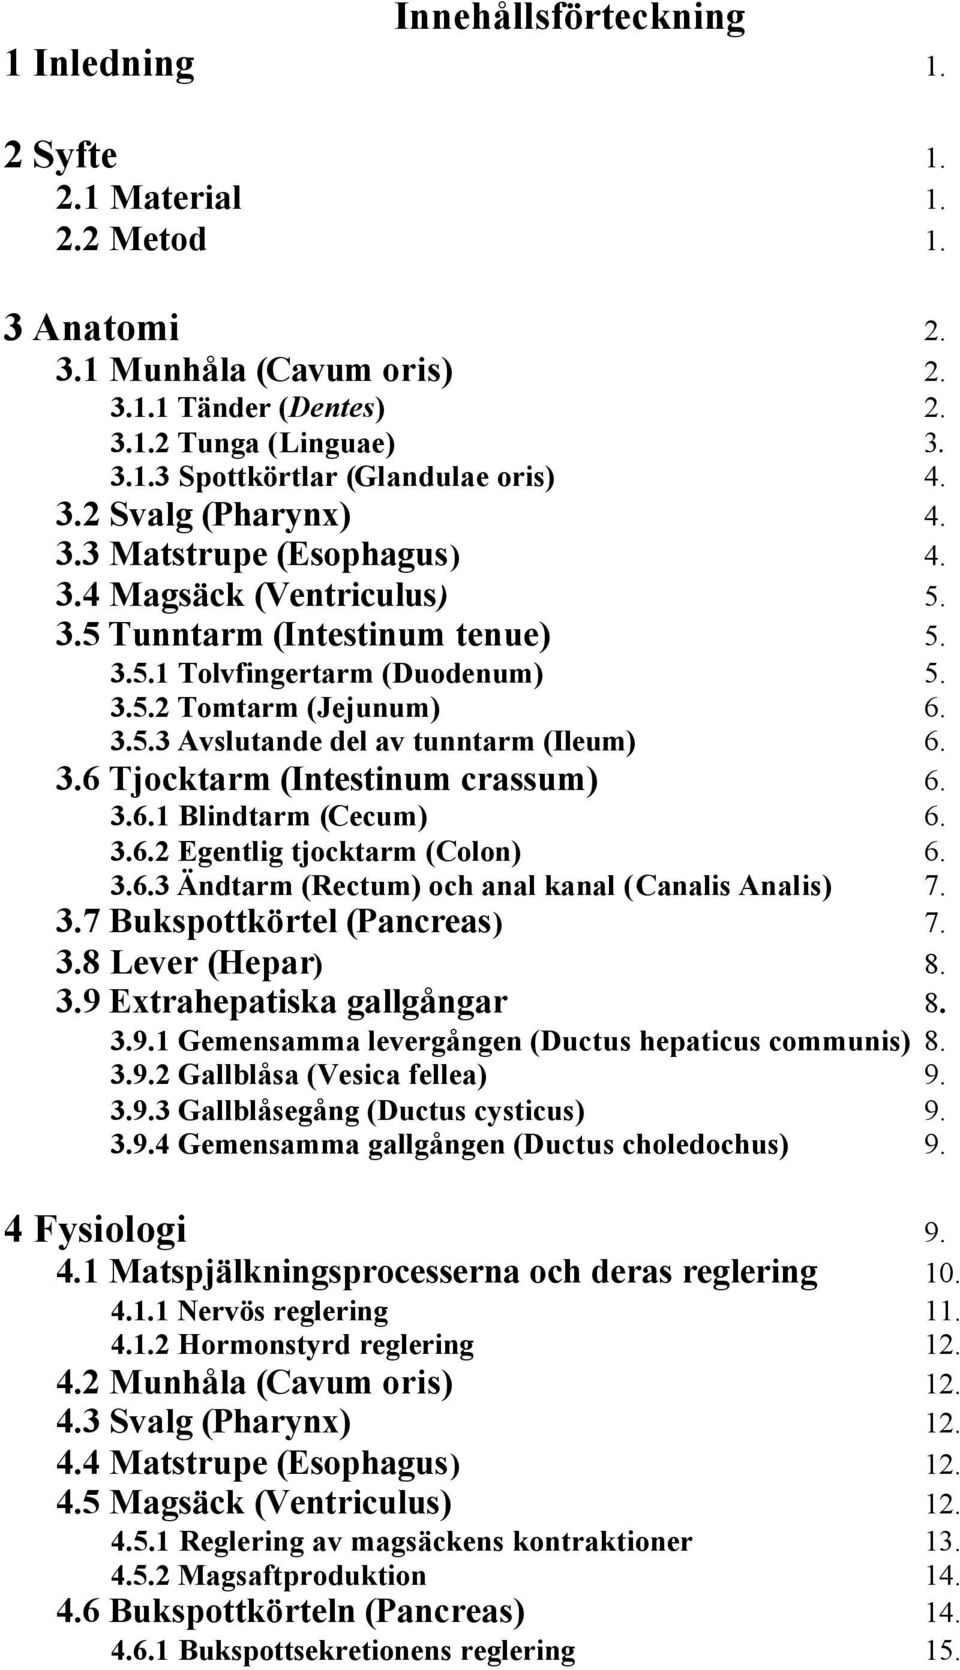 3.6 Tjocktarm (Intestinum crassum) 6. 3.6.1 Blindtarm (Cecum) 6. 3.6.2 Egentlig tjocktarm (Colon) 6. 3.6.3 Ändtarm (Rectum) och anal kanal (Canalis Analis) 7. 3.7 Bukspottkörtel (Pancreas) 7. 3.8 Lever (Hepar) 8.